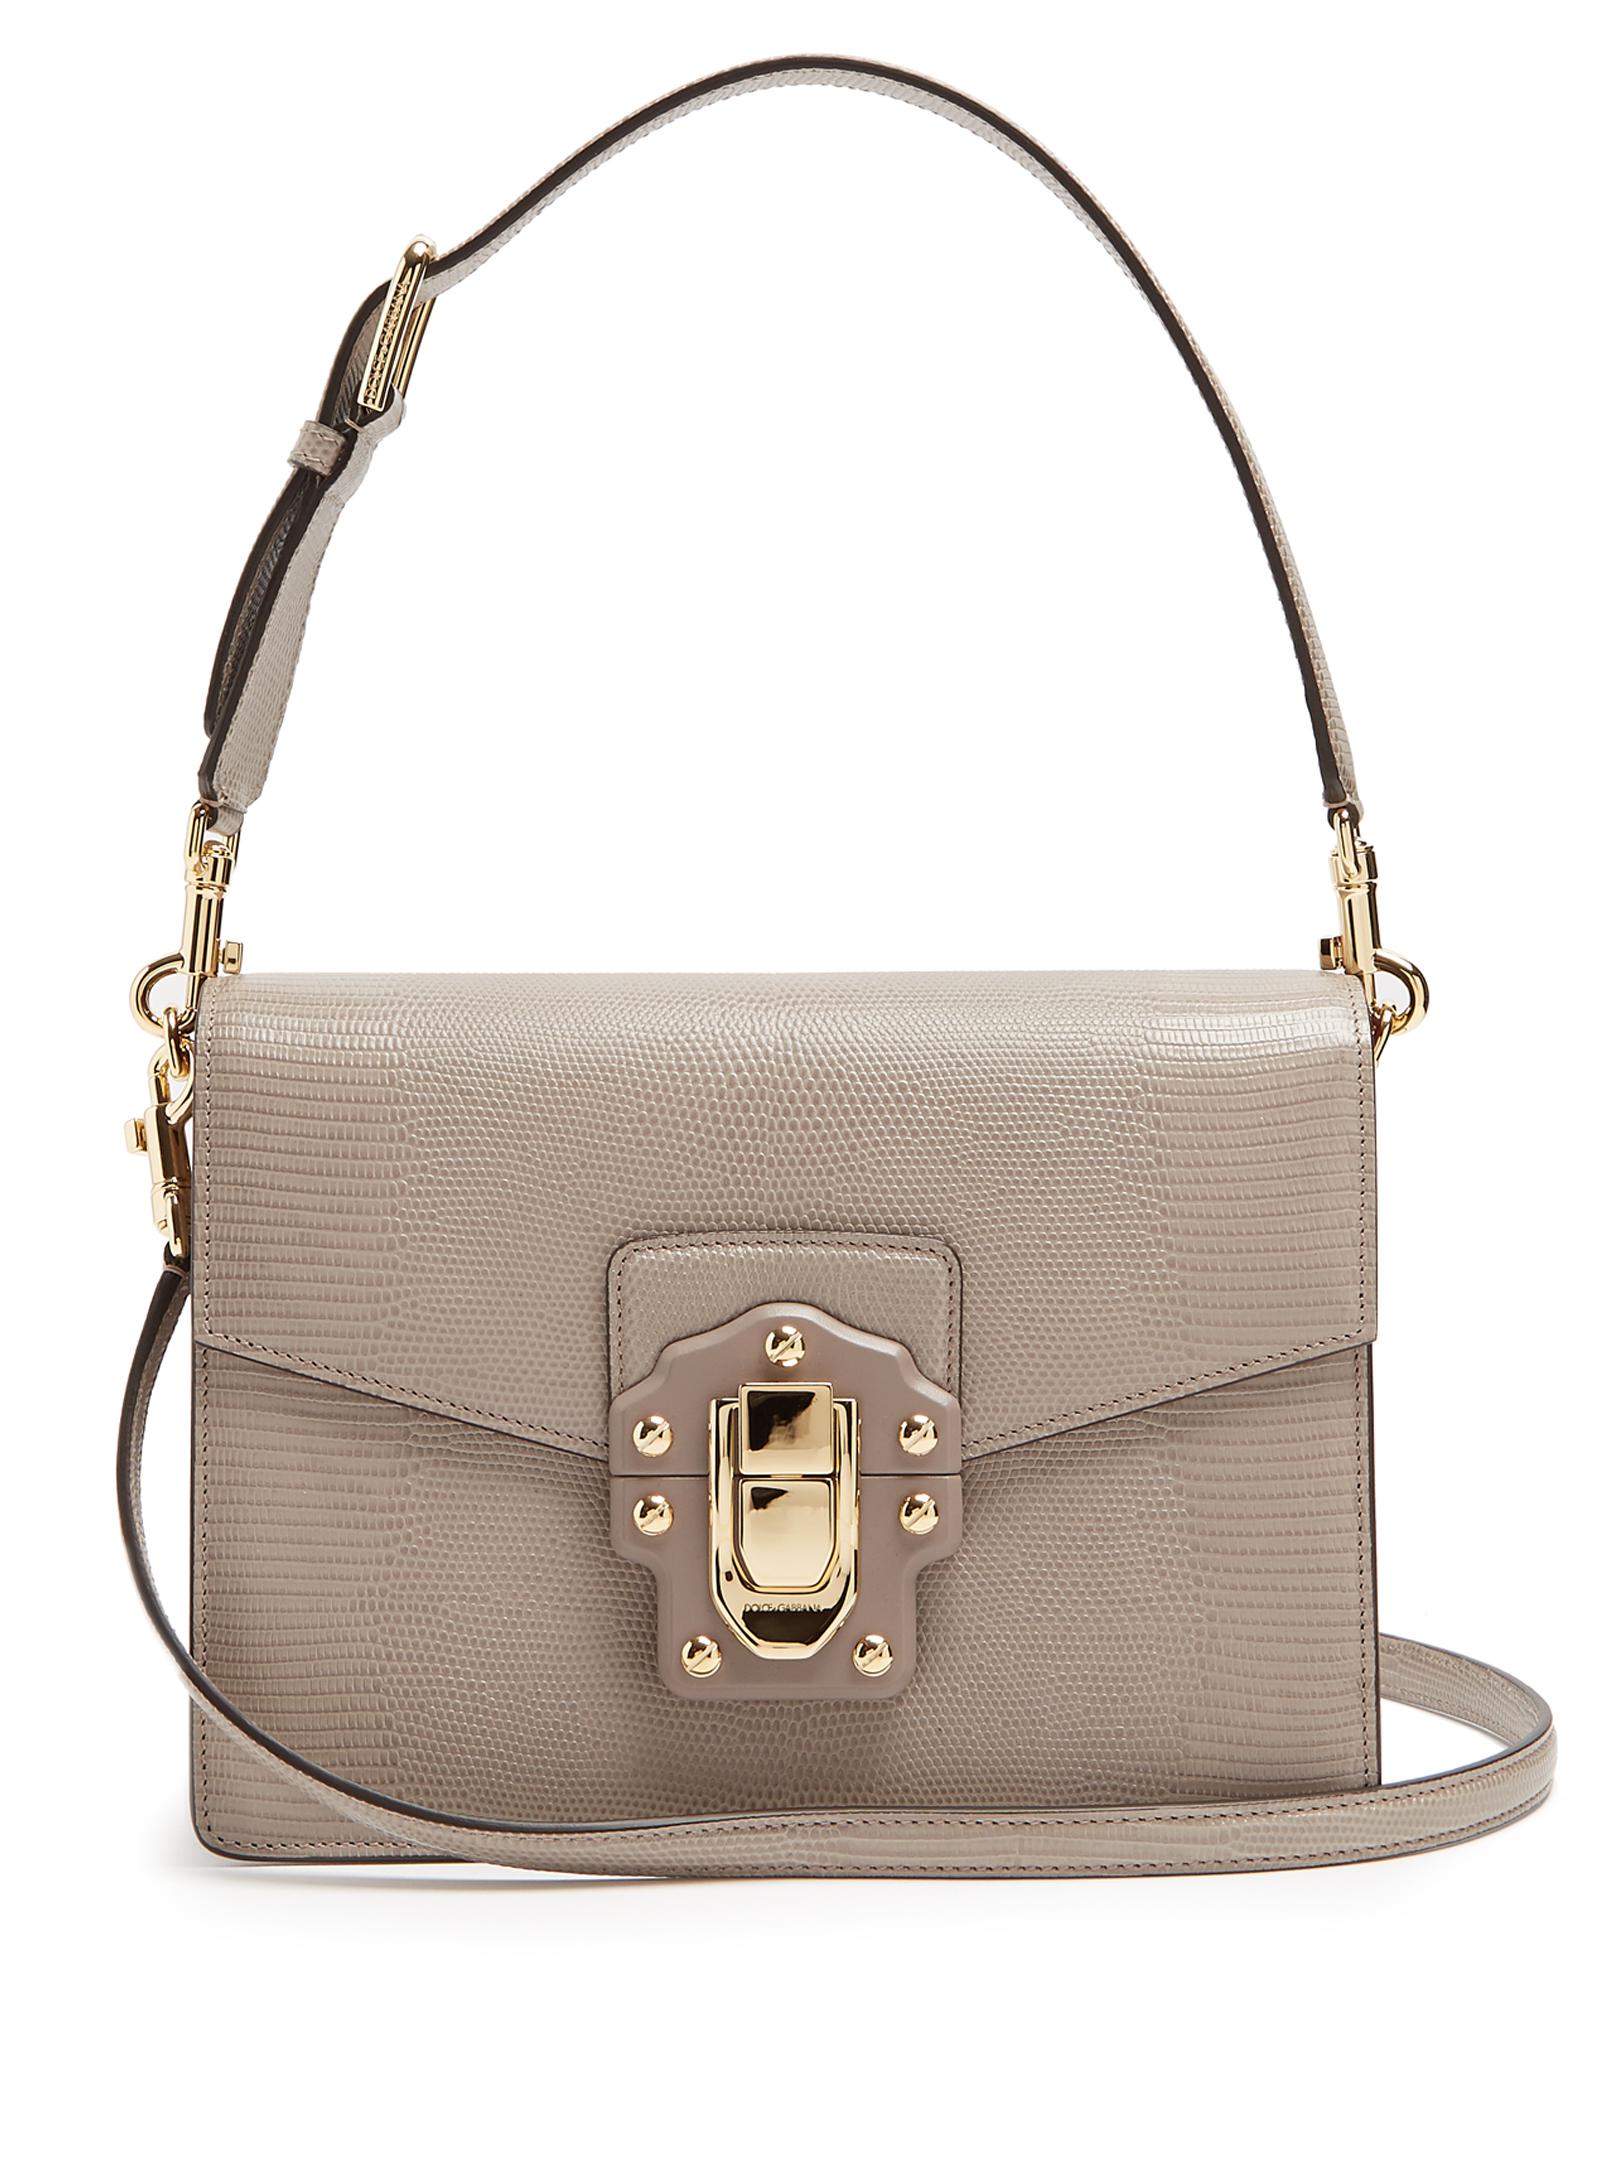 Dolce & Gabbana Lucia Lizard-effect Leather Shoulder Bag in Gray | Lyst